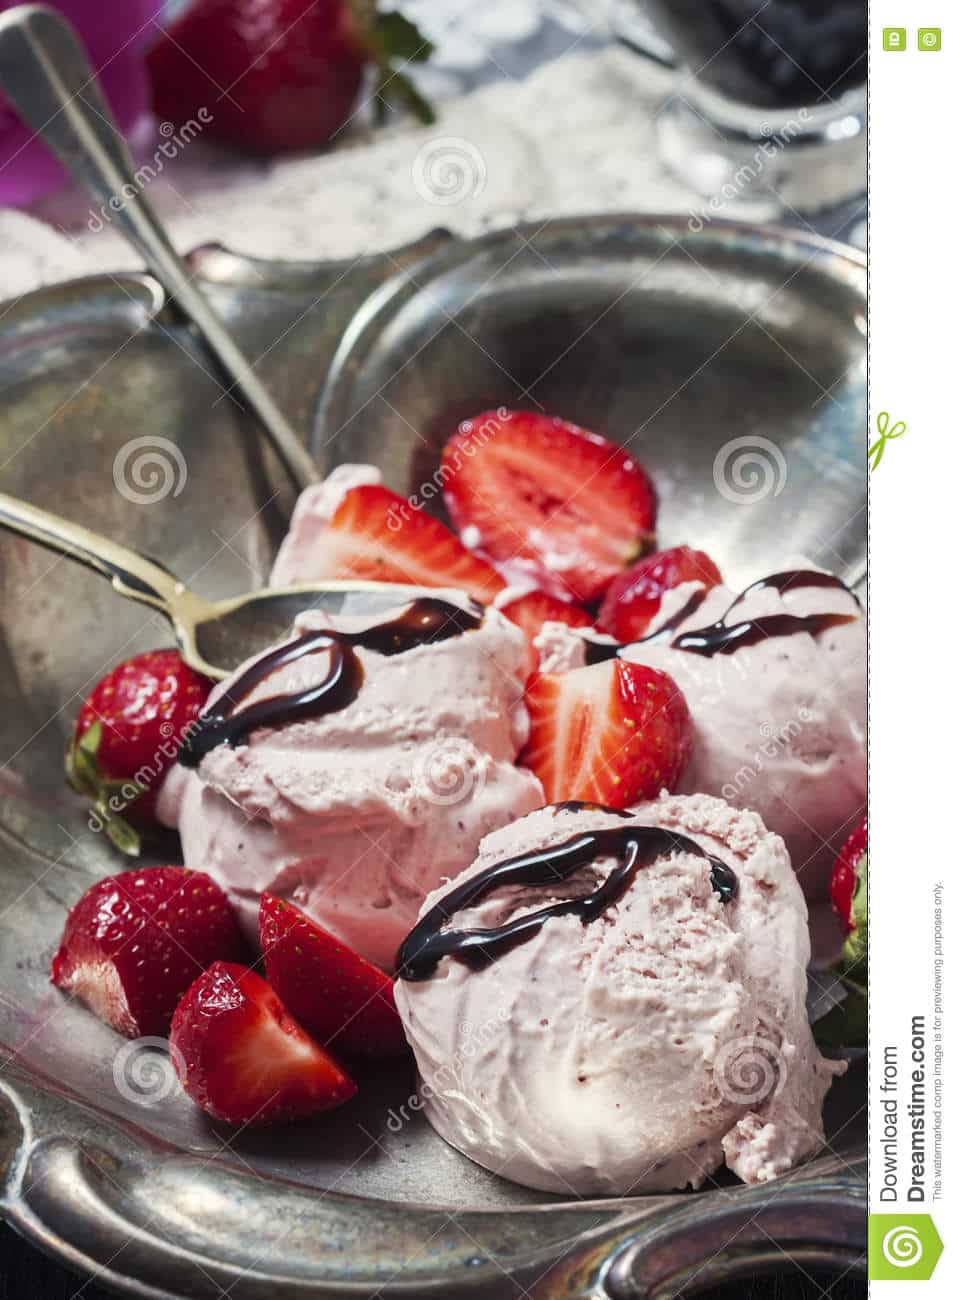 Strawberry Ice Cream Balsamic Vinegar Wooden Backgroun Background Selective Focus 72657048 9154658